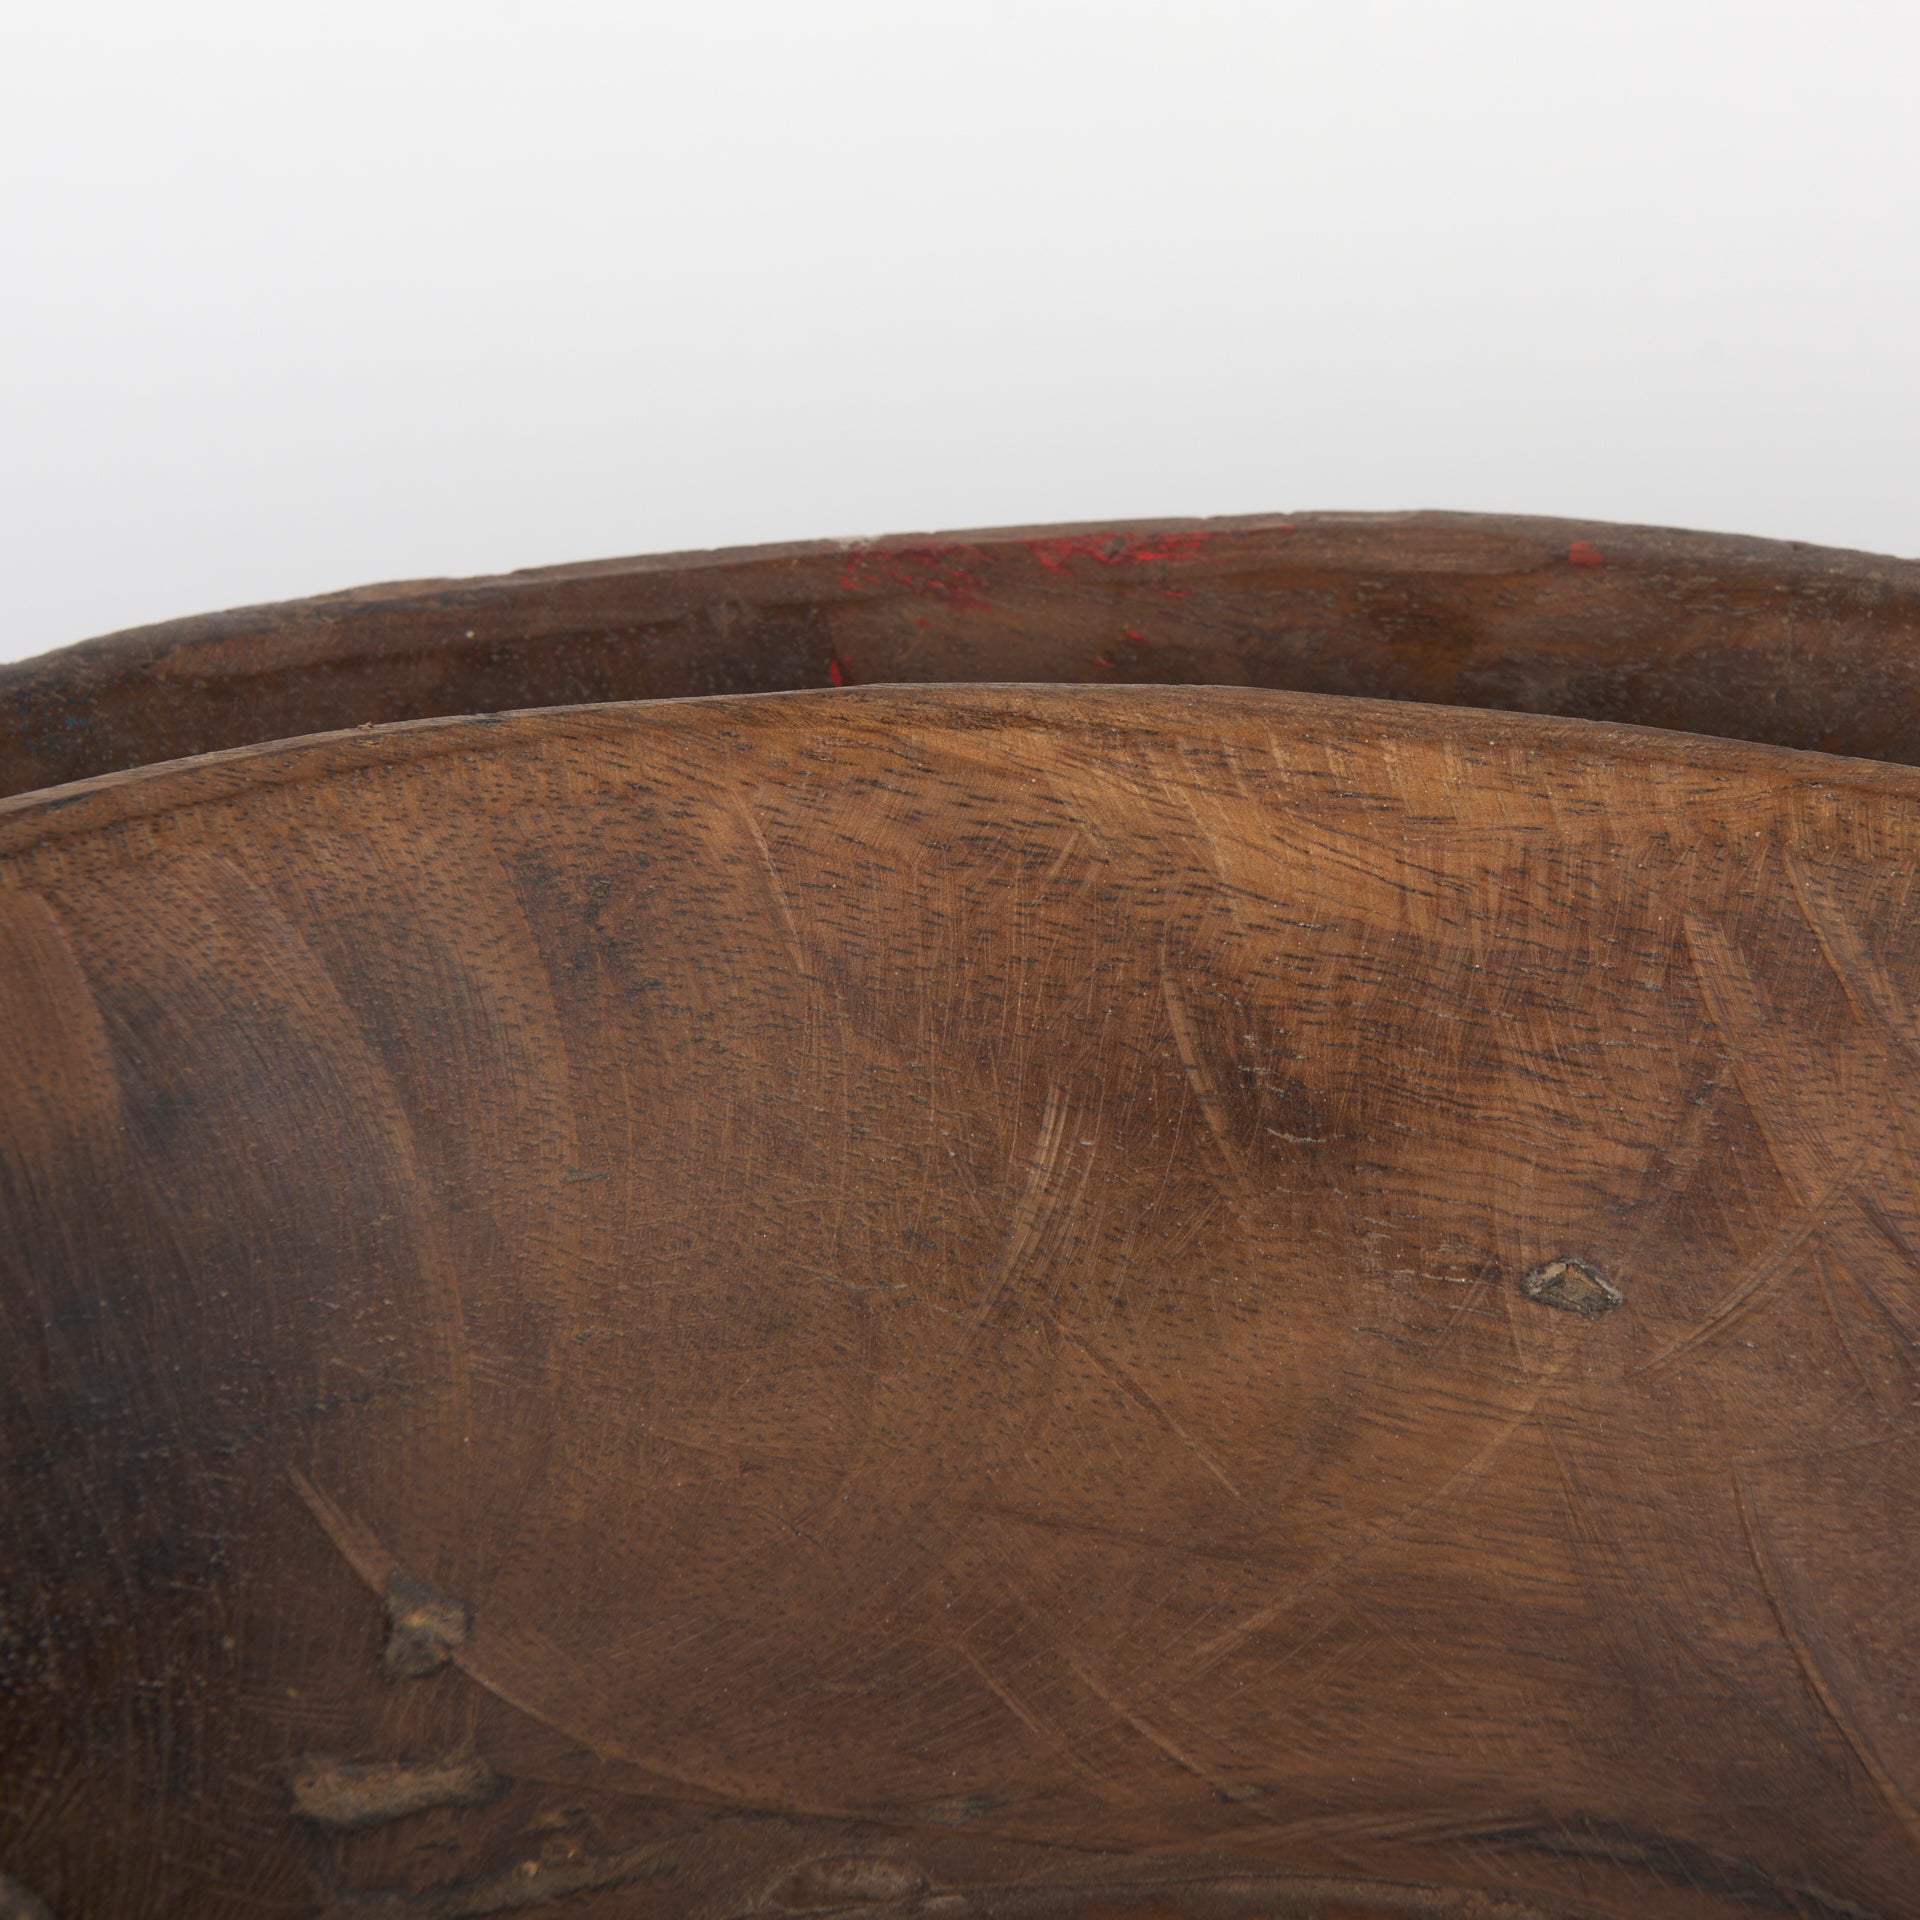 Keru Wooden Bowls- Medium Brown